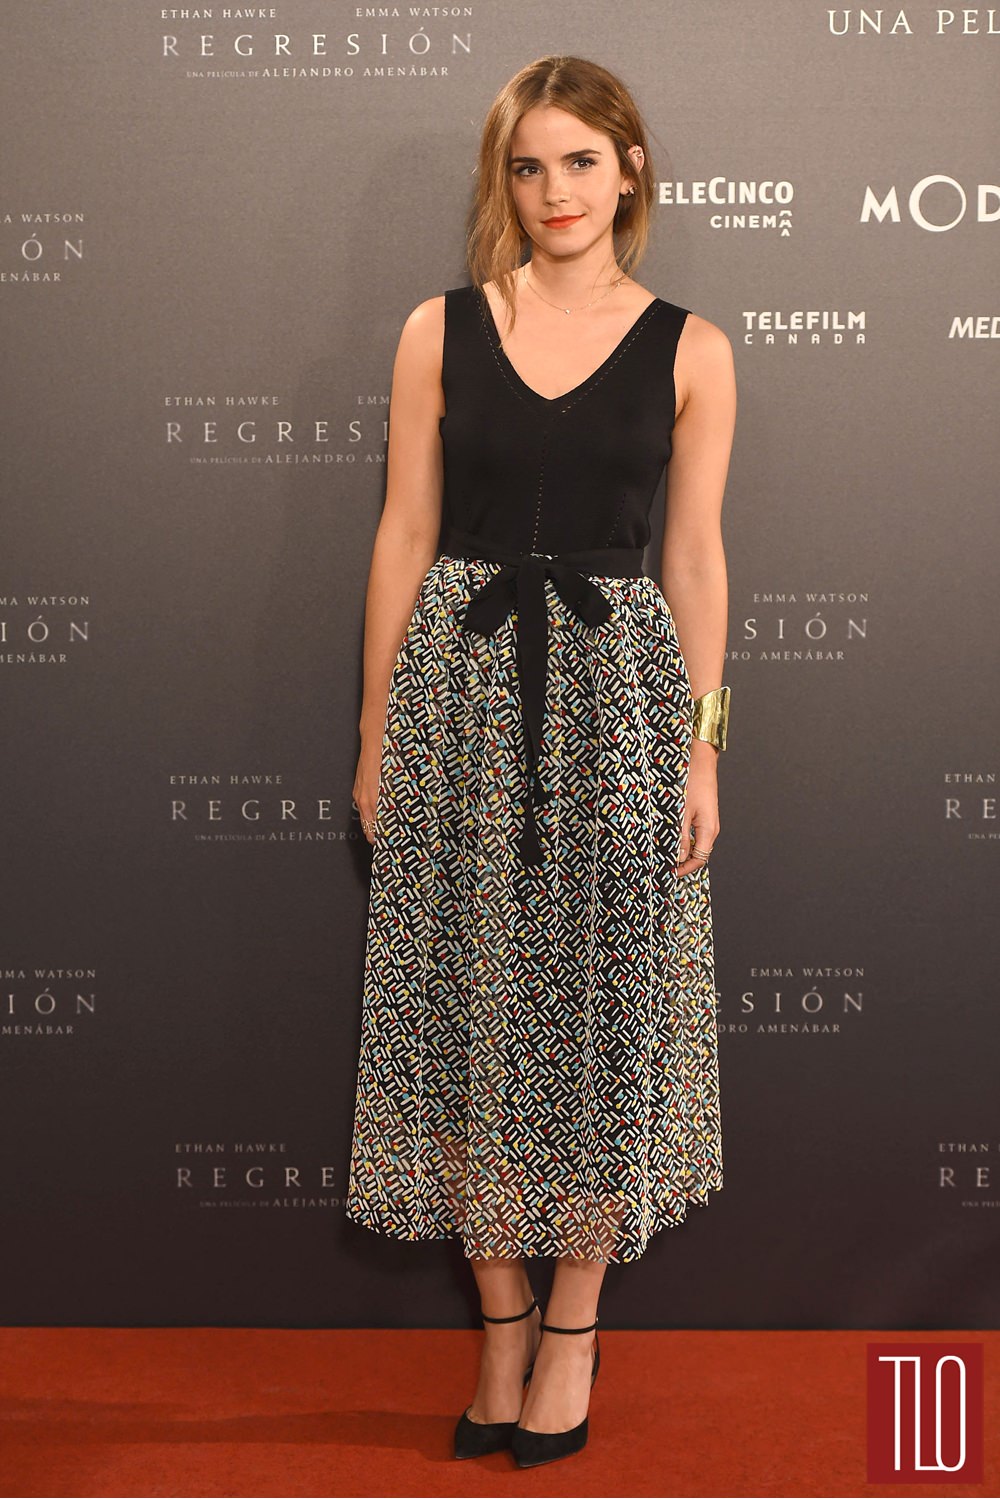 Emma-Watson-Regression-Madrid-Photocall-Red-Carpet-Fashion-Christopher-Kane-Tom-Lorenzo-Site-TLO (1)